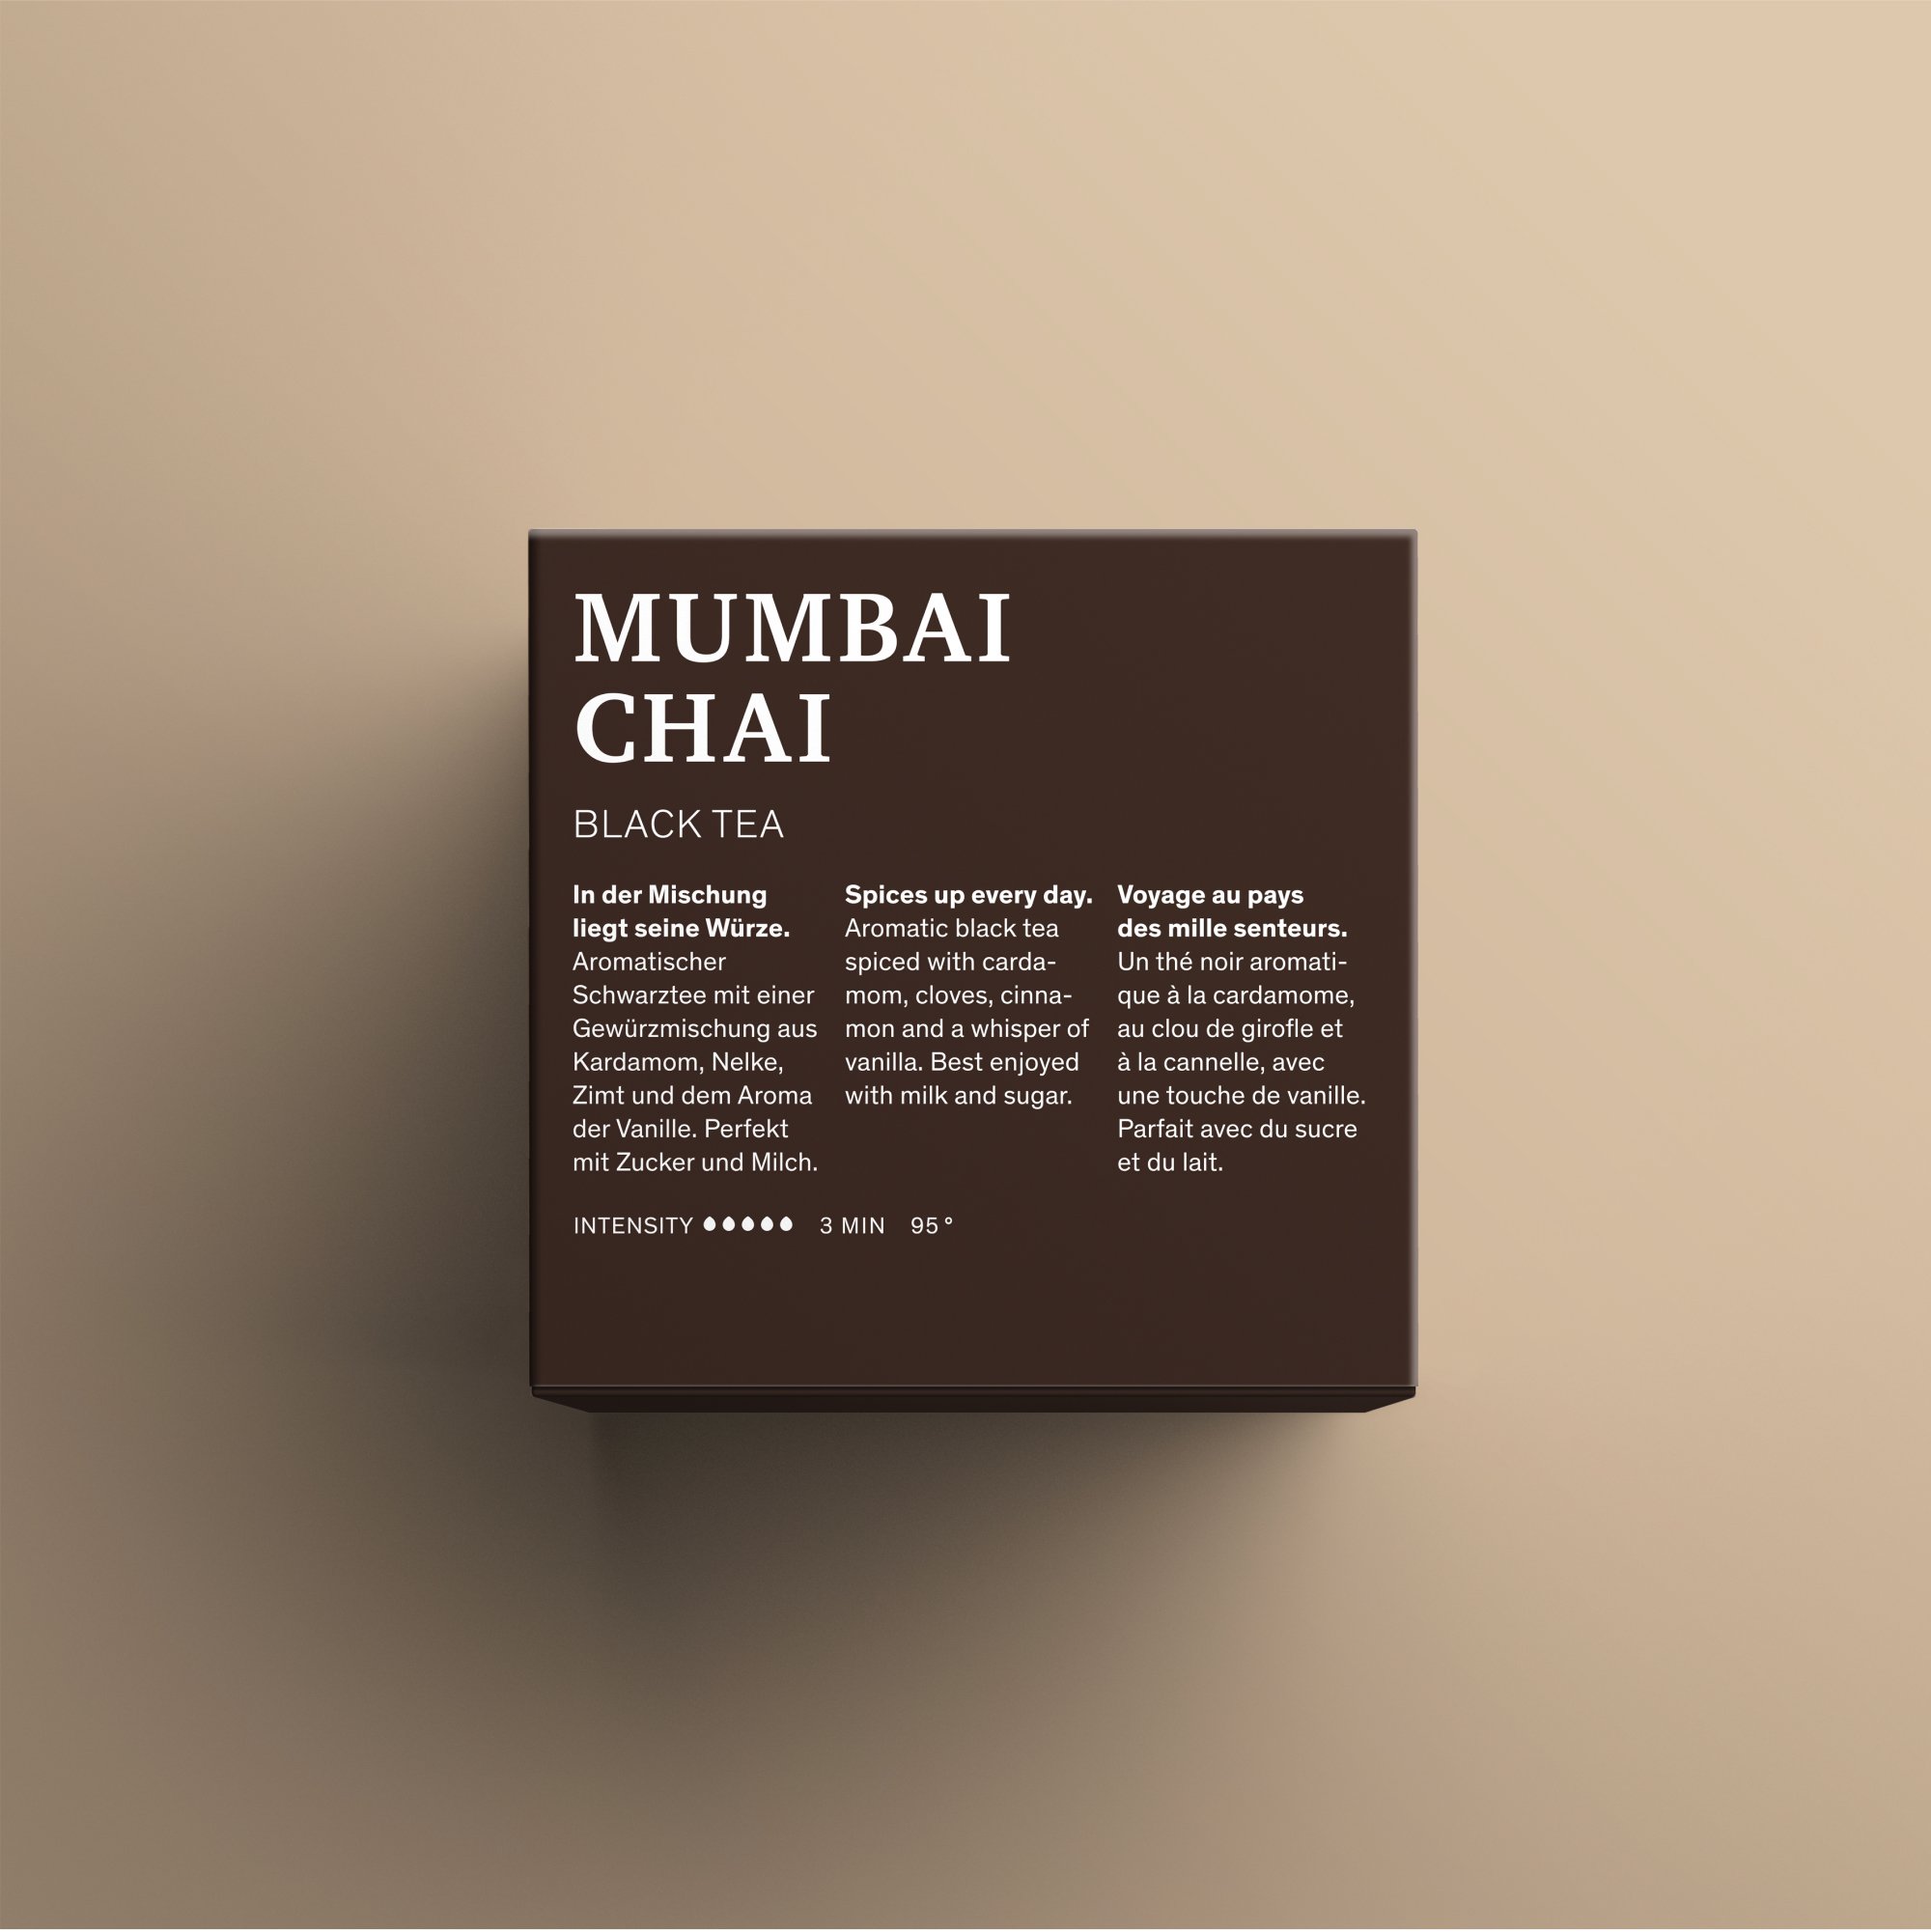 Mumbai Chai Packaging back